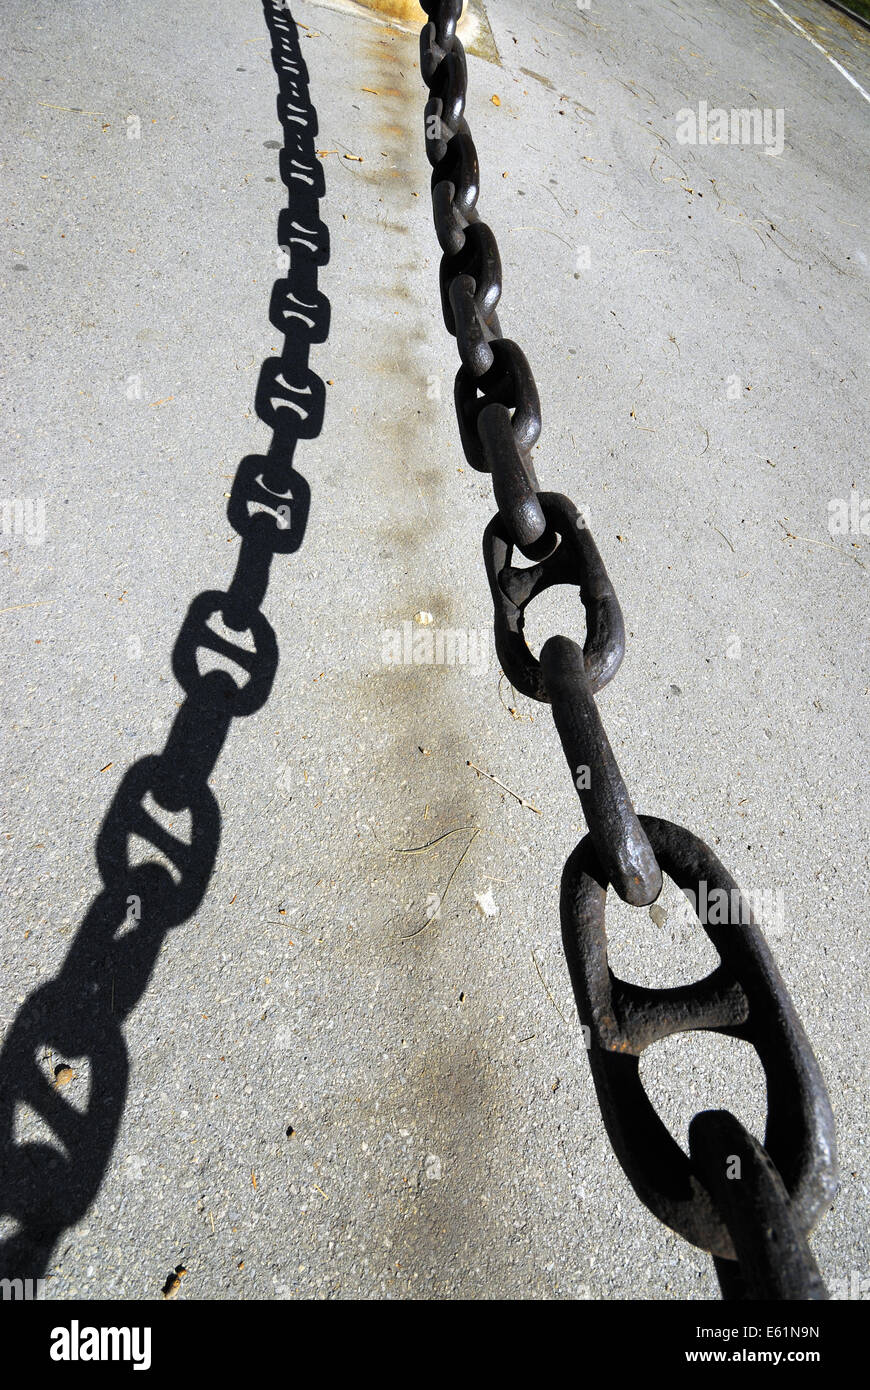 massive iron chain Stock Photo